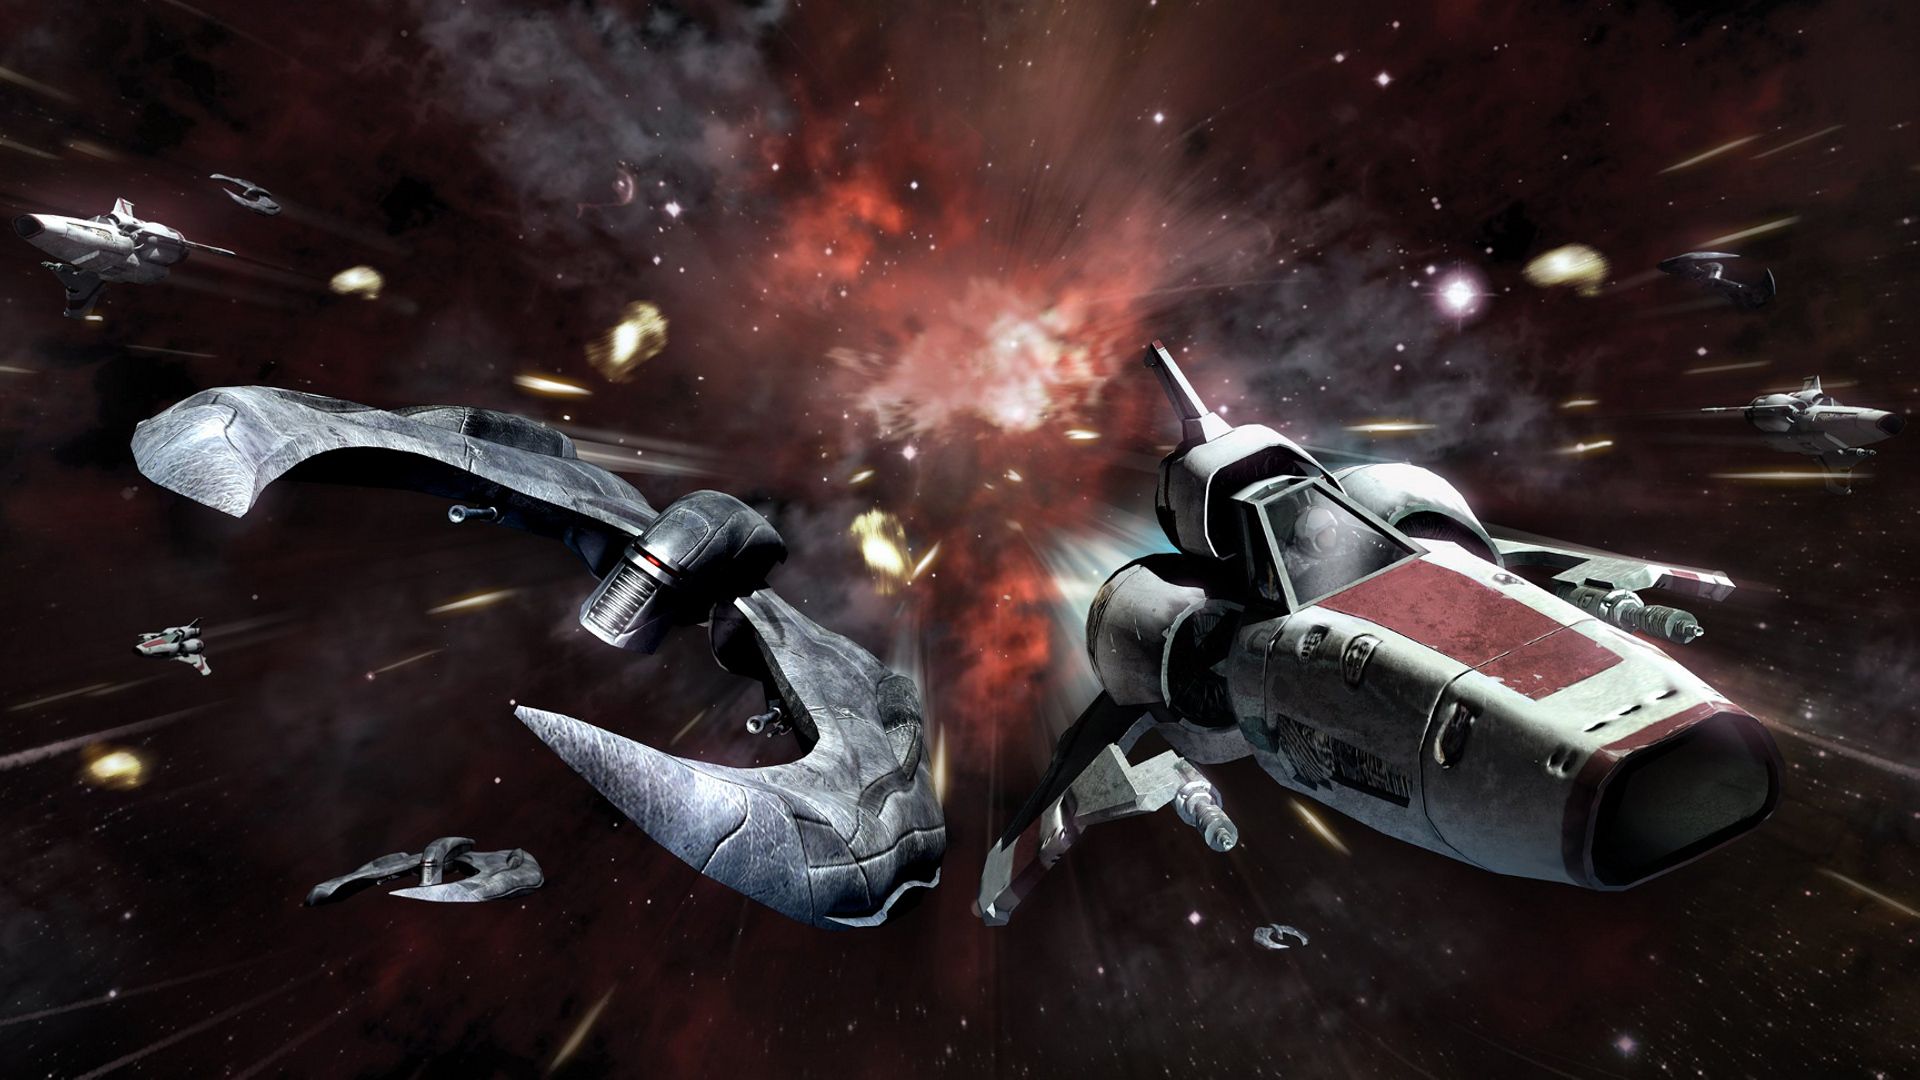 Battlestar Galactica: Blood & Chrome background